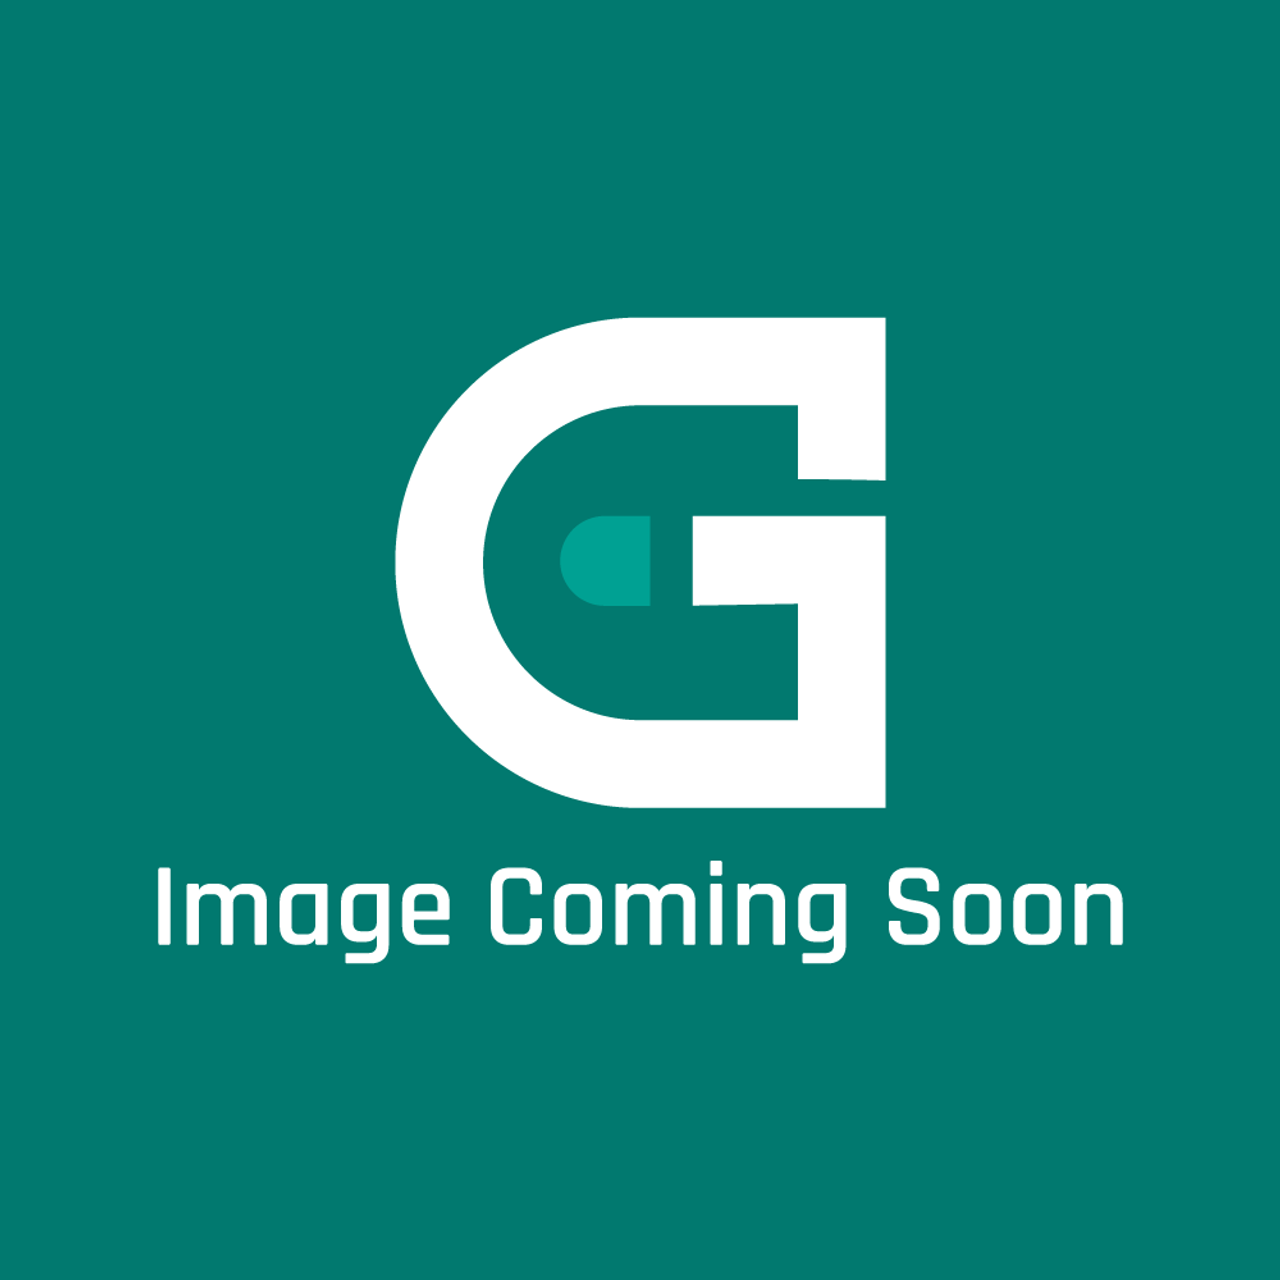 GE Appliances WB7X5631 - CAP TRIM - Image Coming Soon!